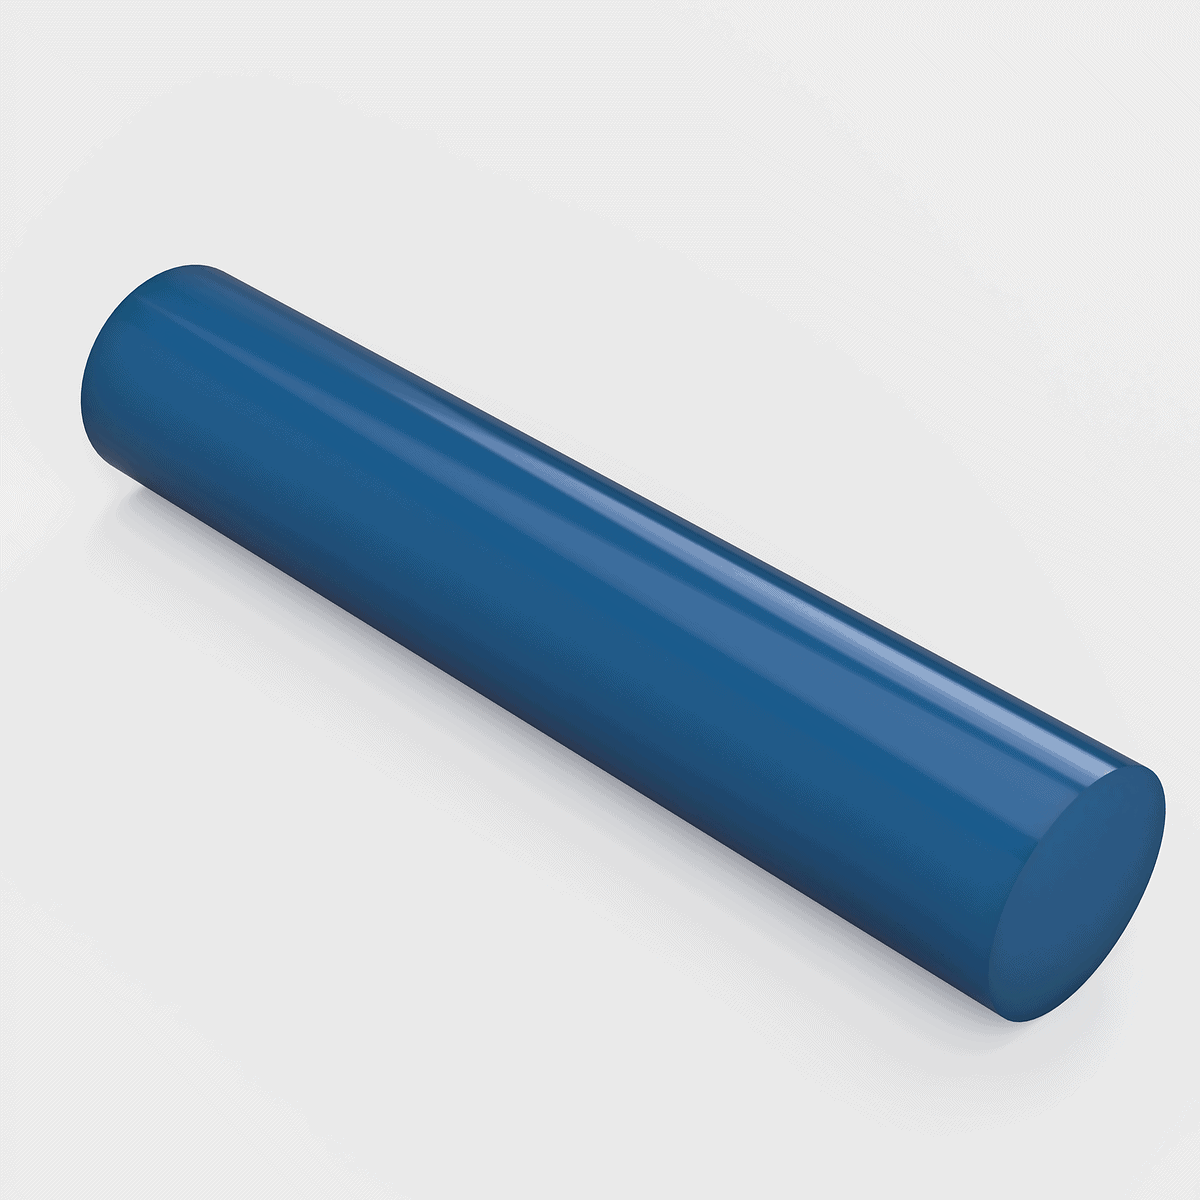 Plastic rod PUR blue